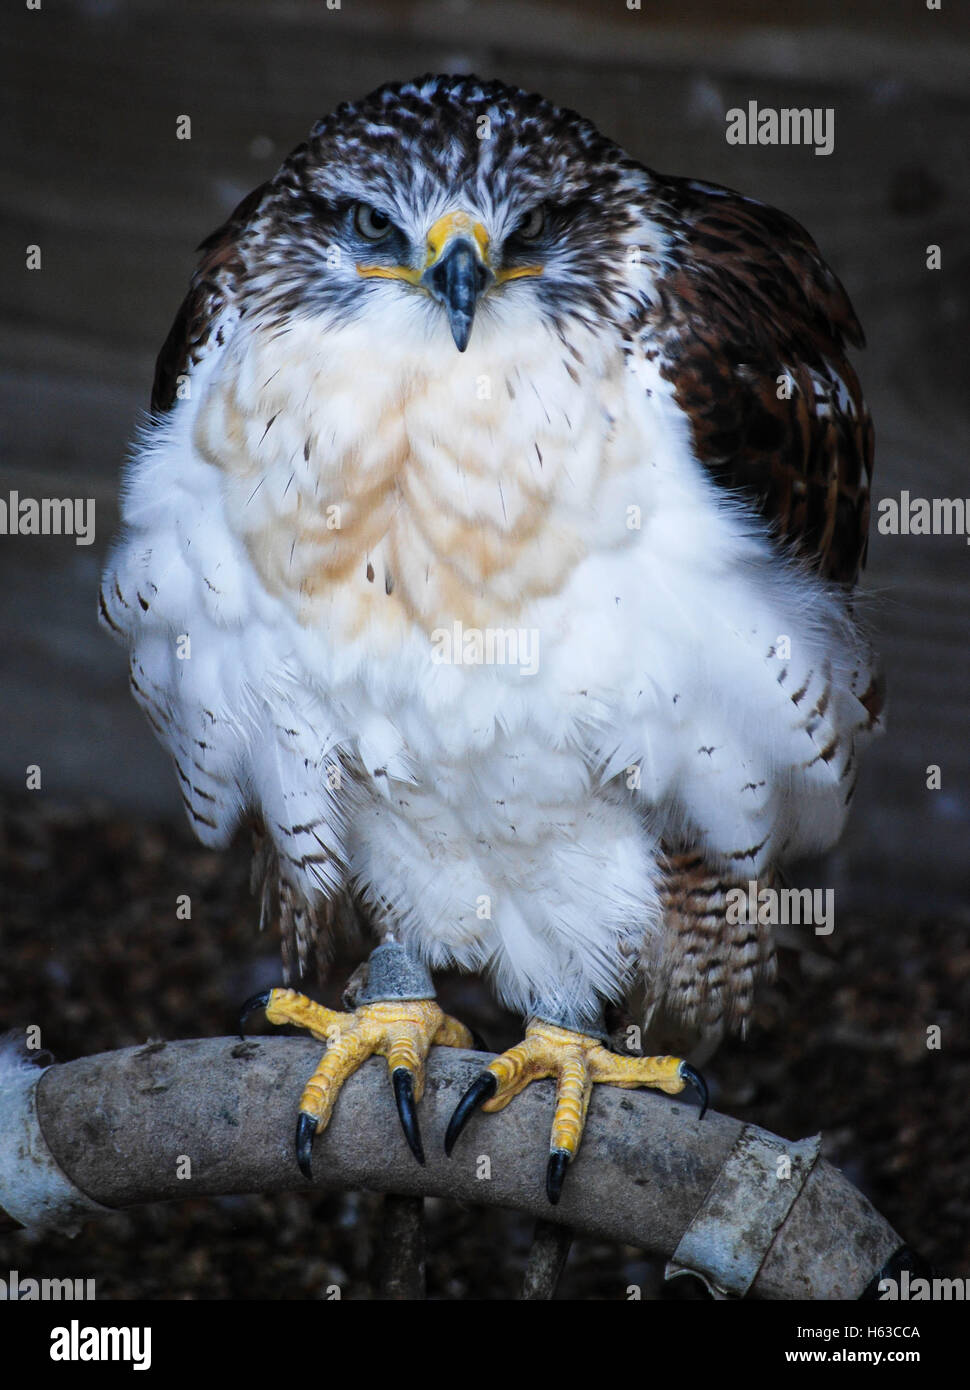 grumpy bird of prey Stock Photo